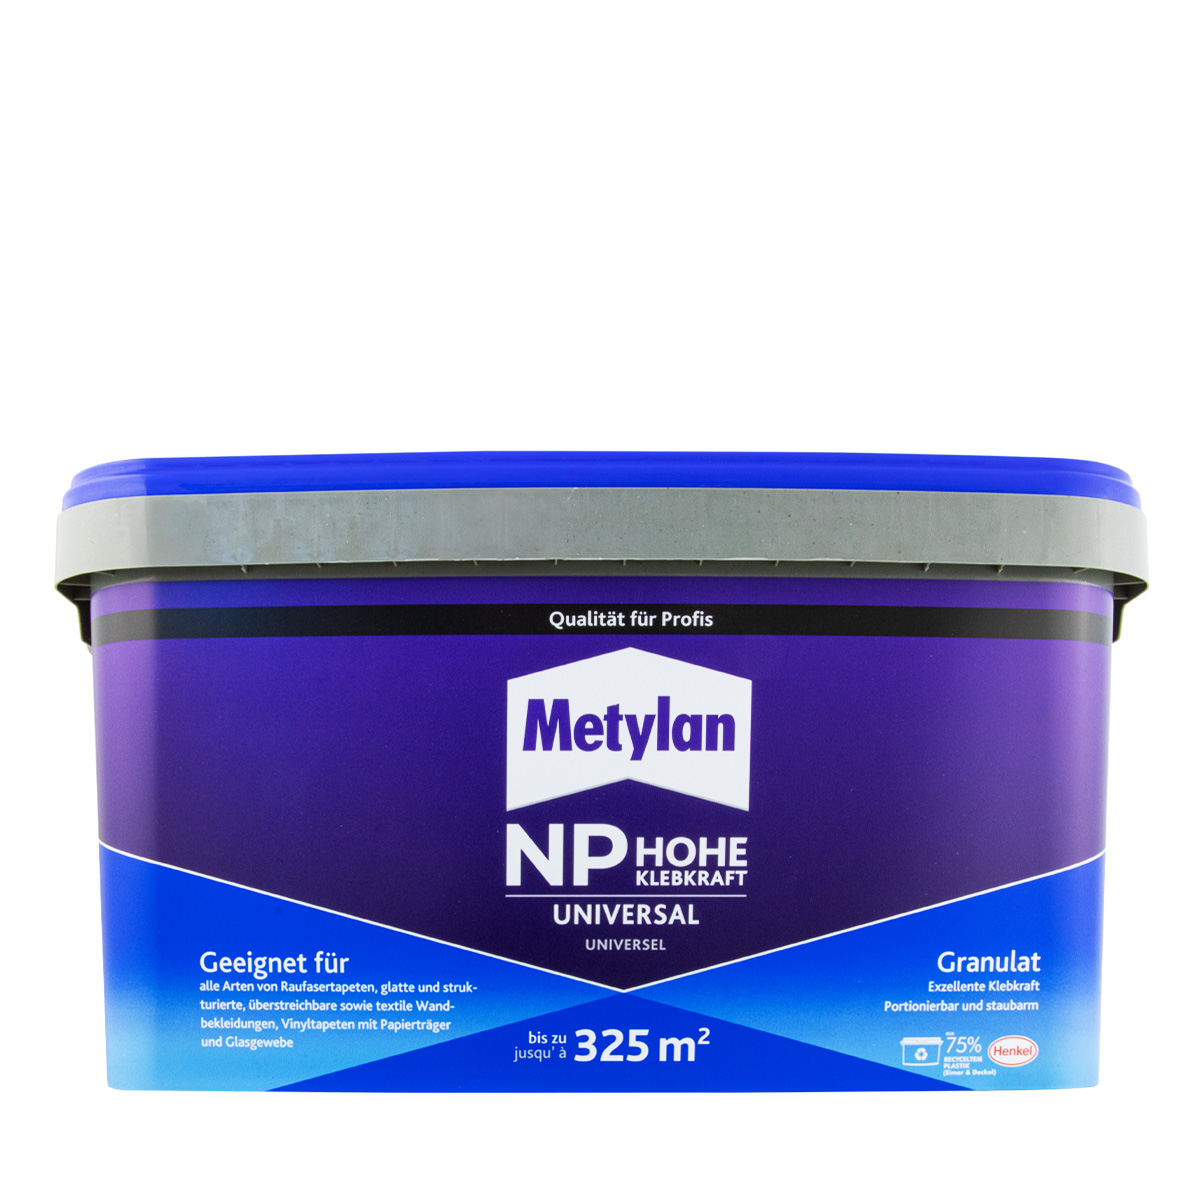 Metylan Produkte online bestellen | Farbklecks24